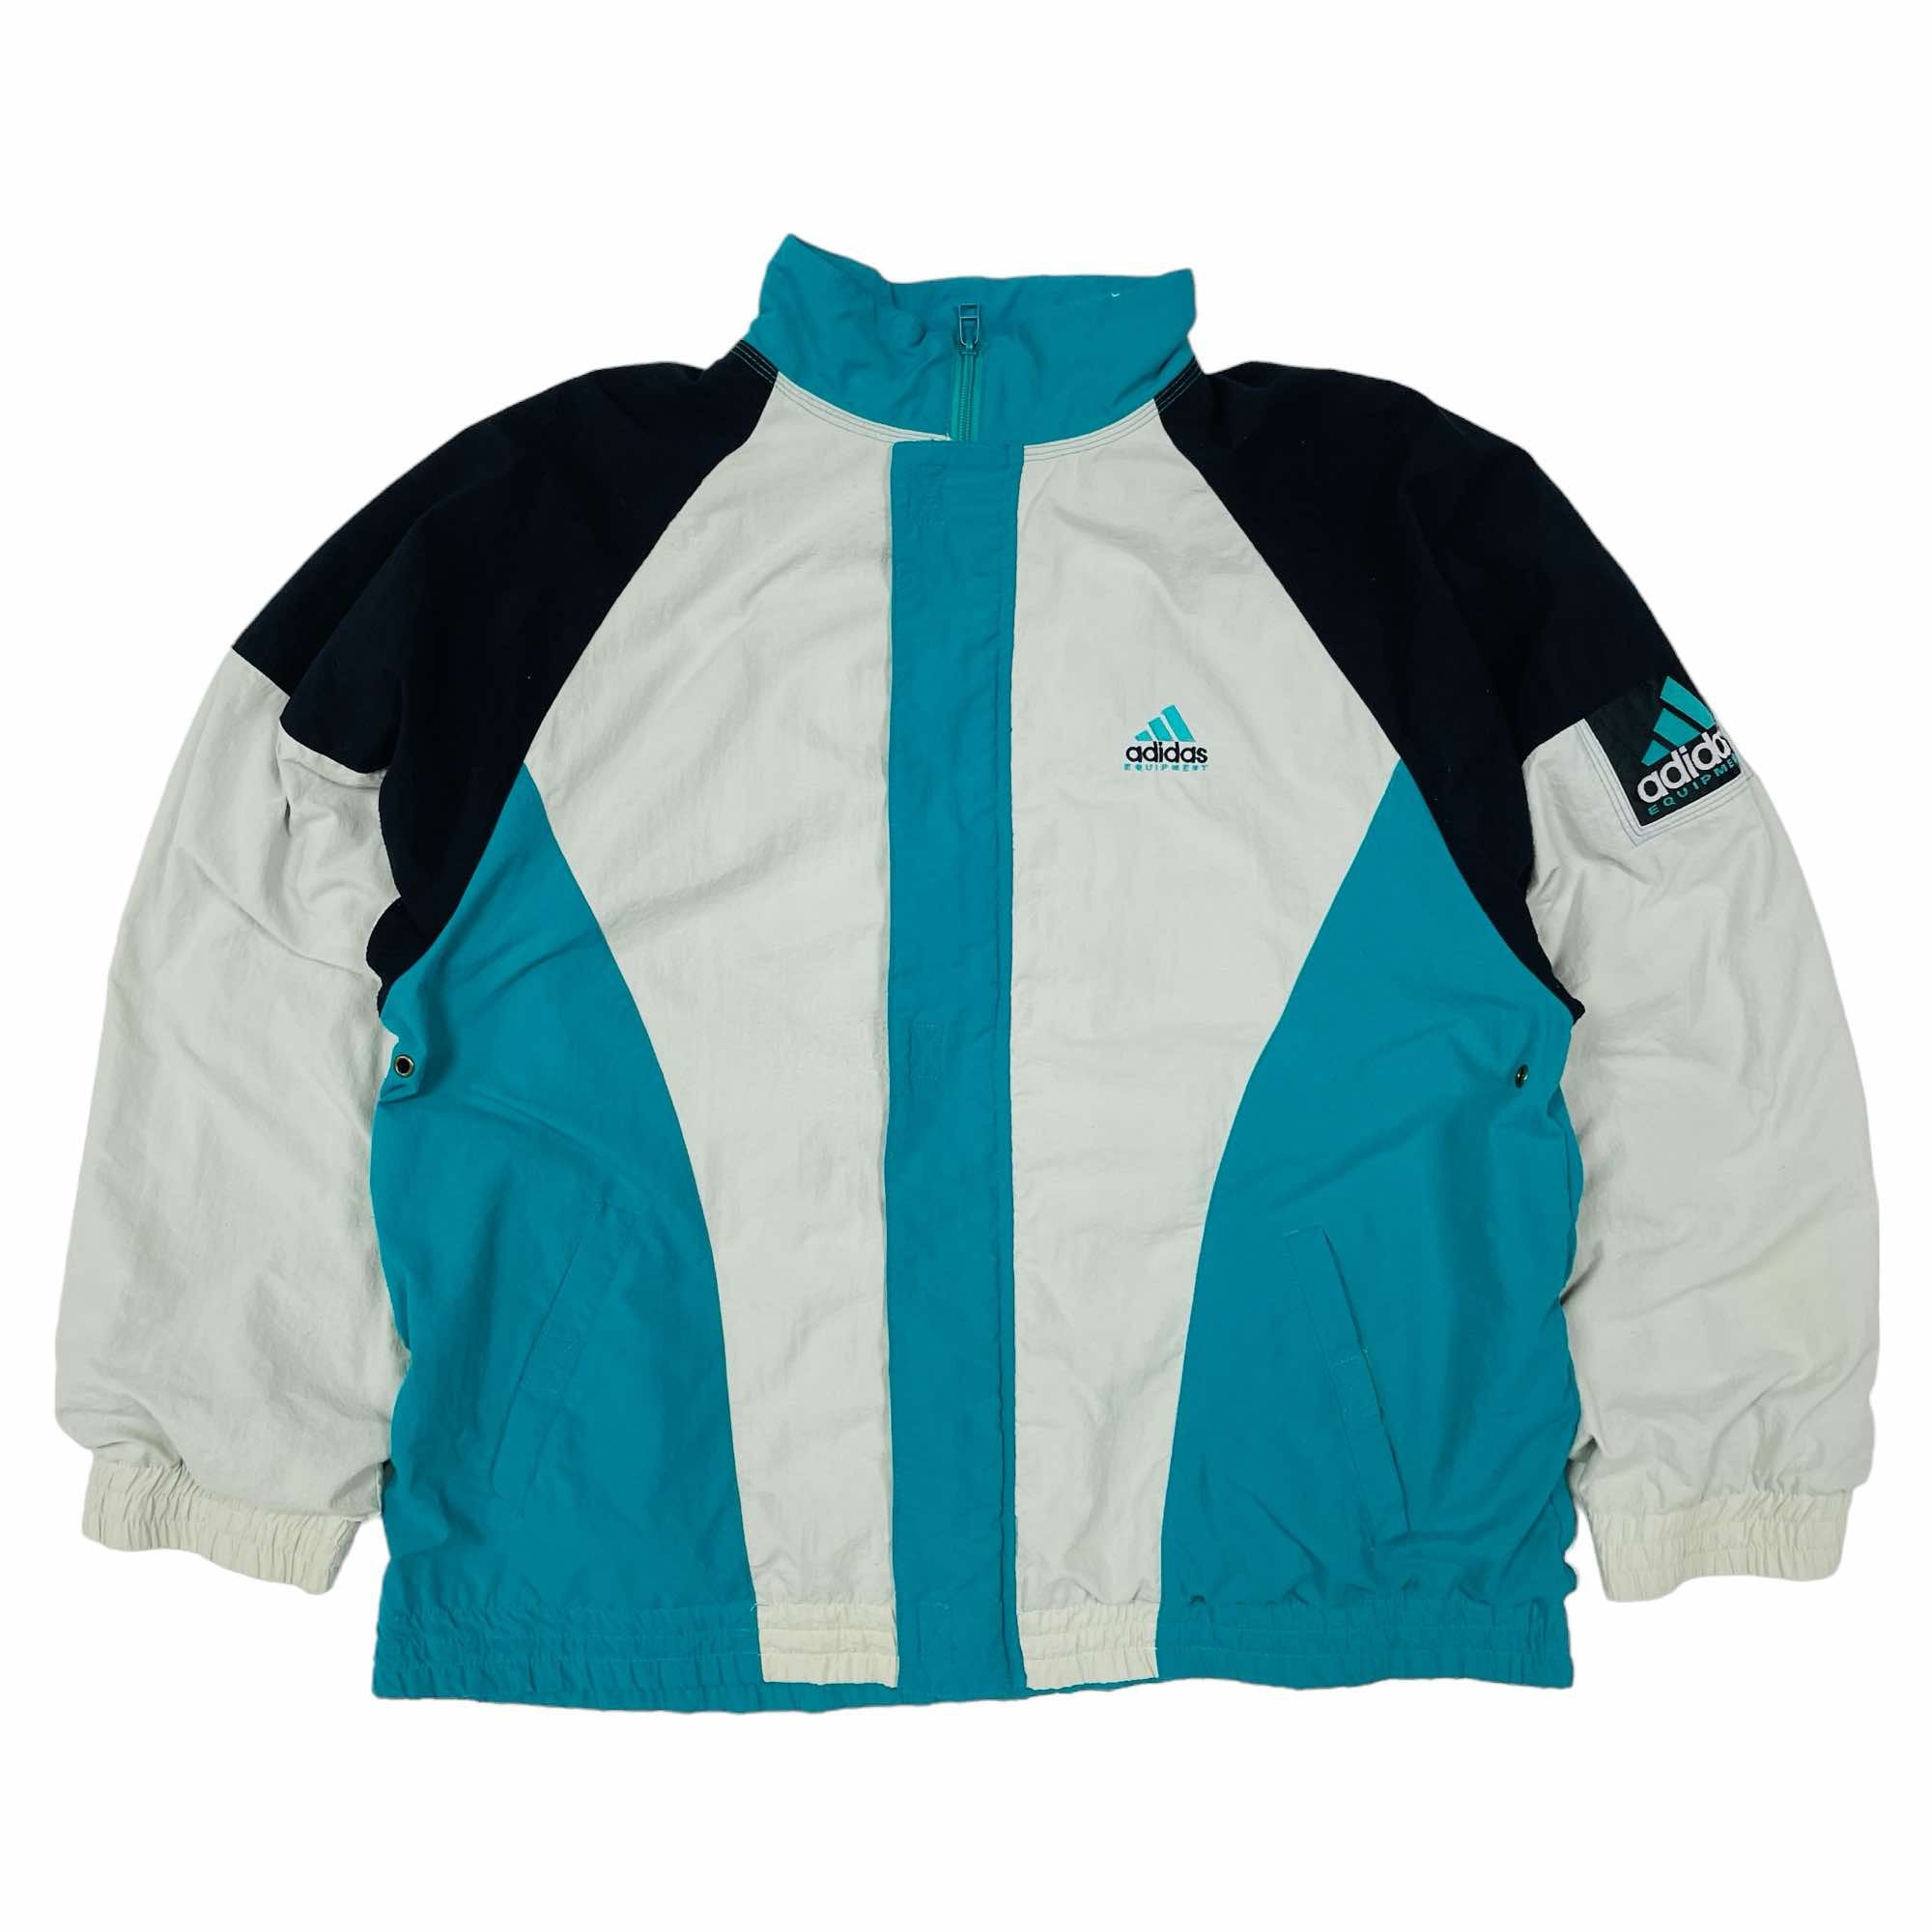 90s Adidas Equipment Track Jacket - XL